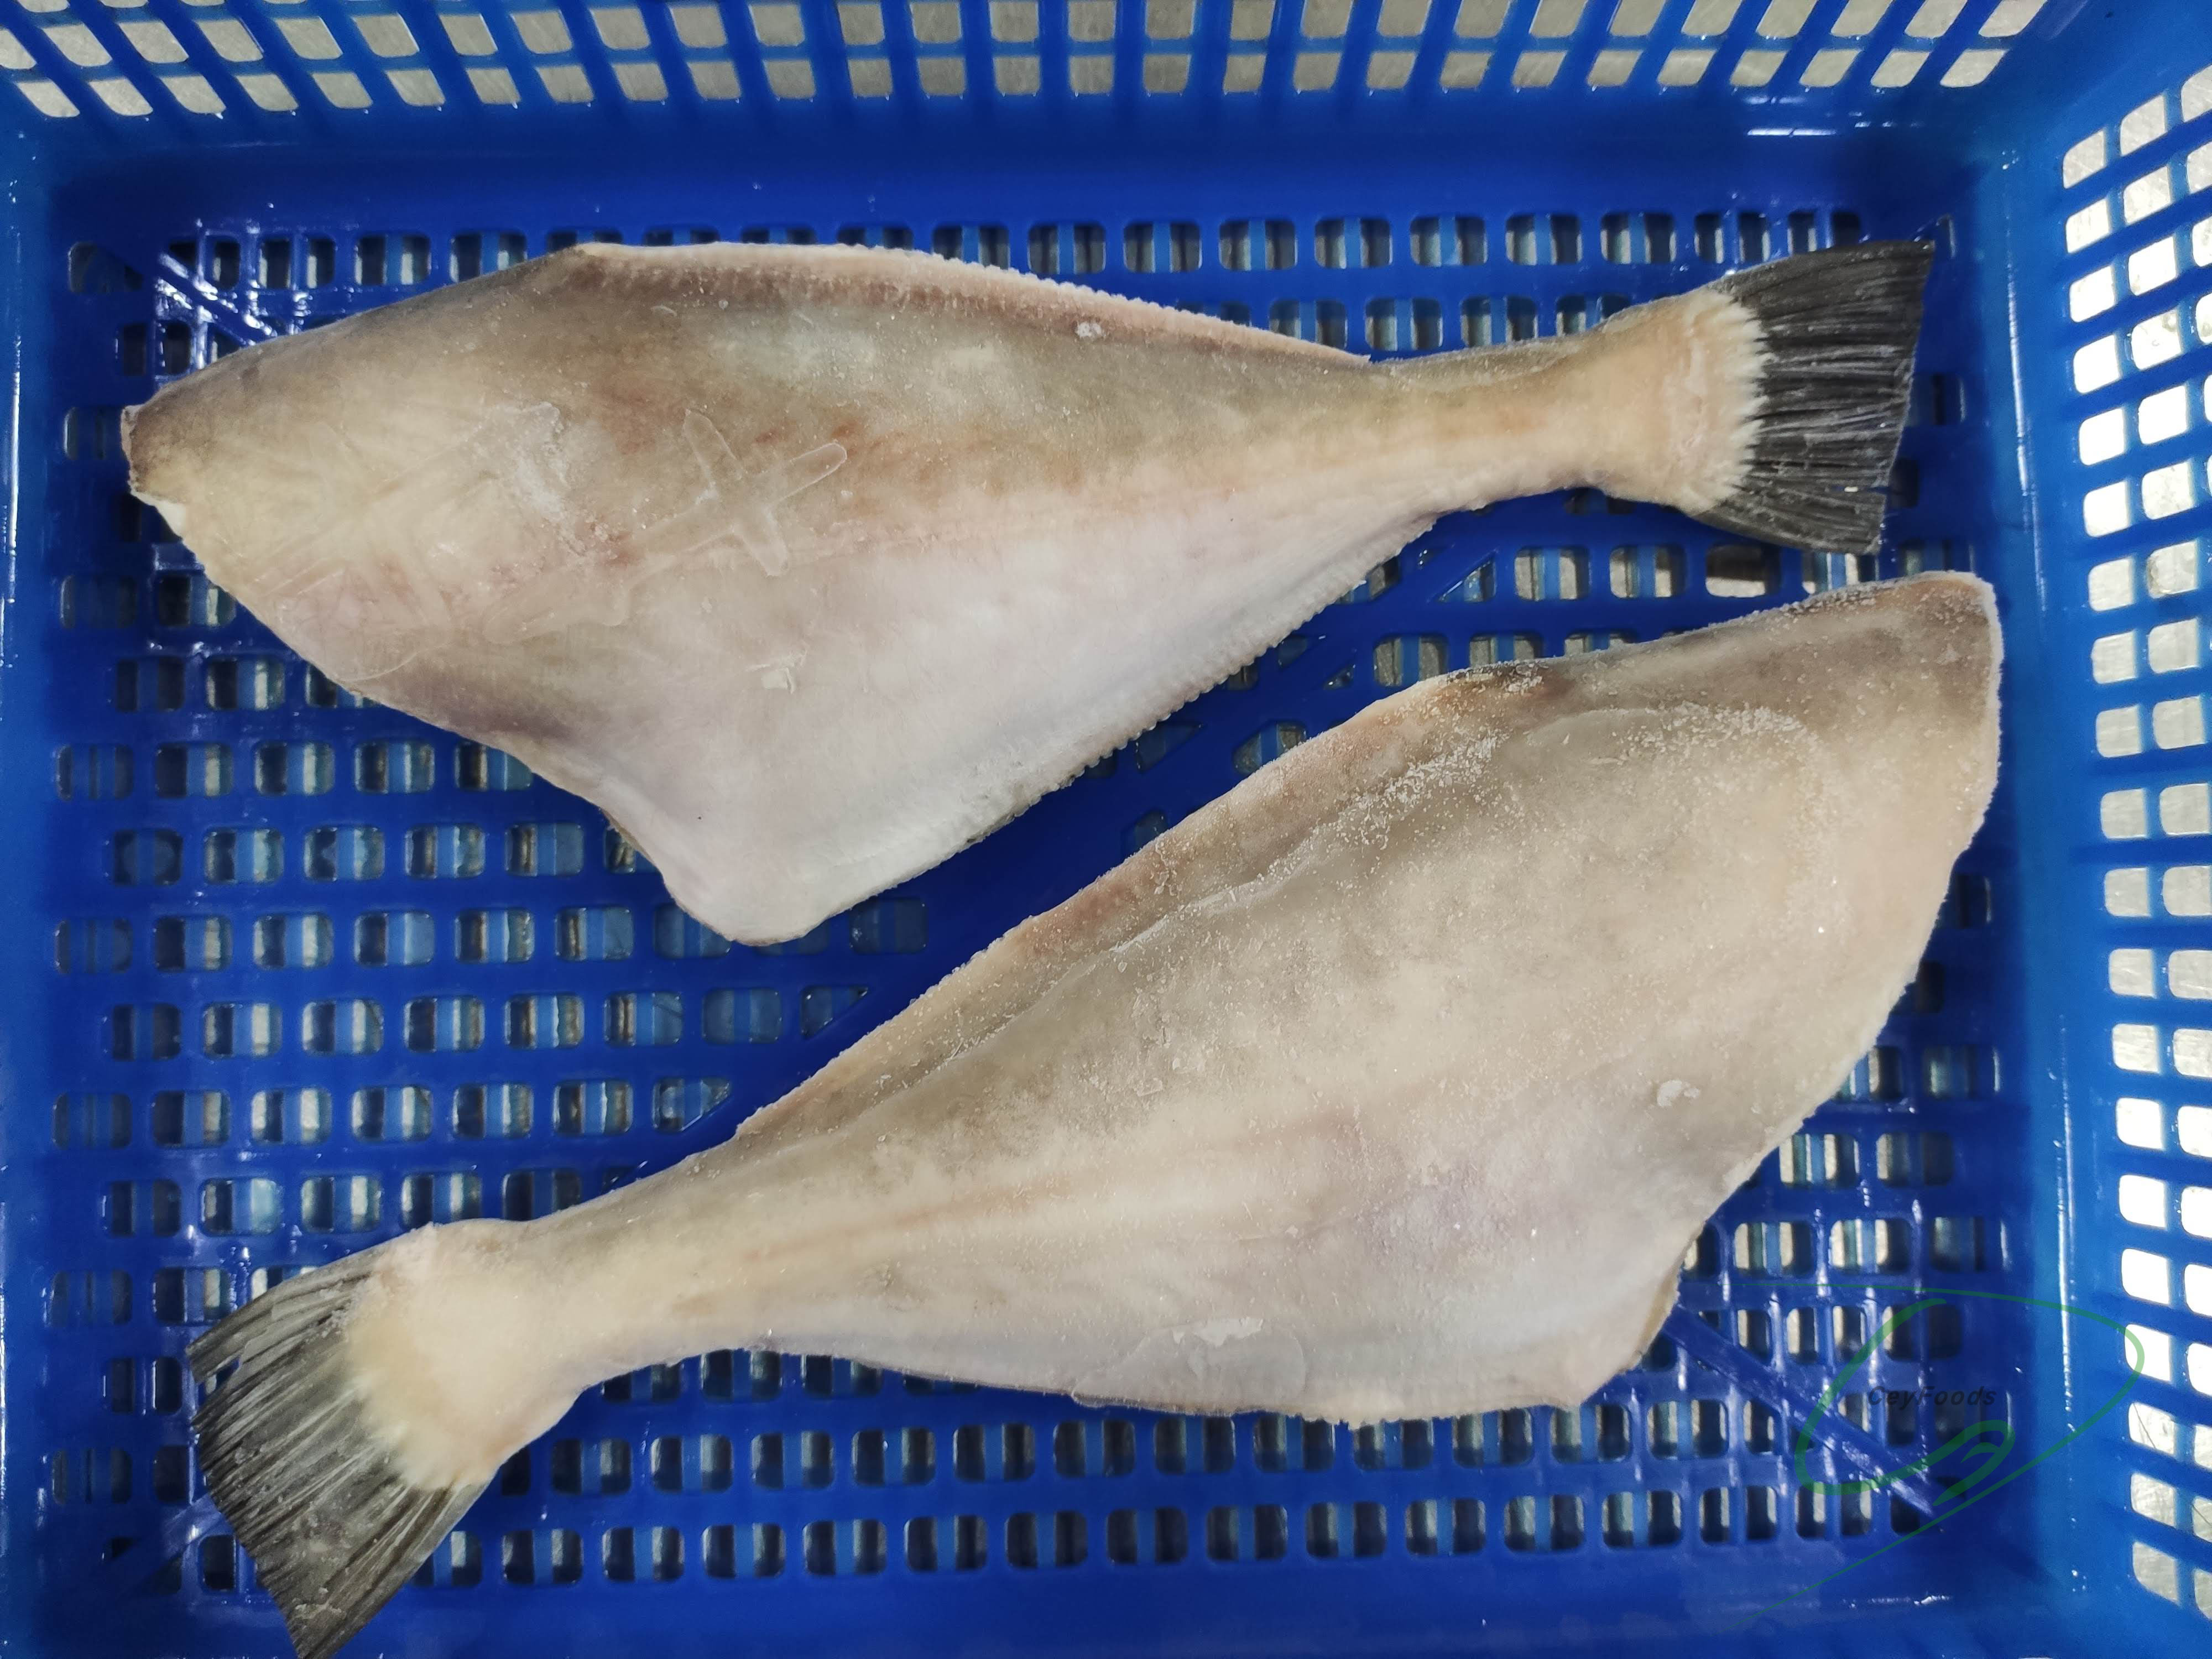 fish ceylon foods exports sri lanka ceyfoods seafood processor exporter